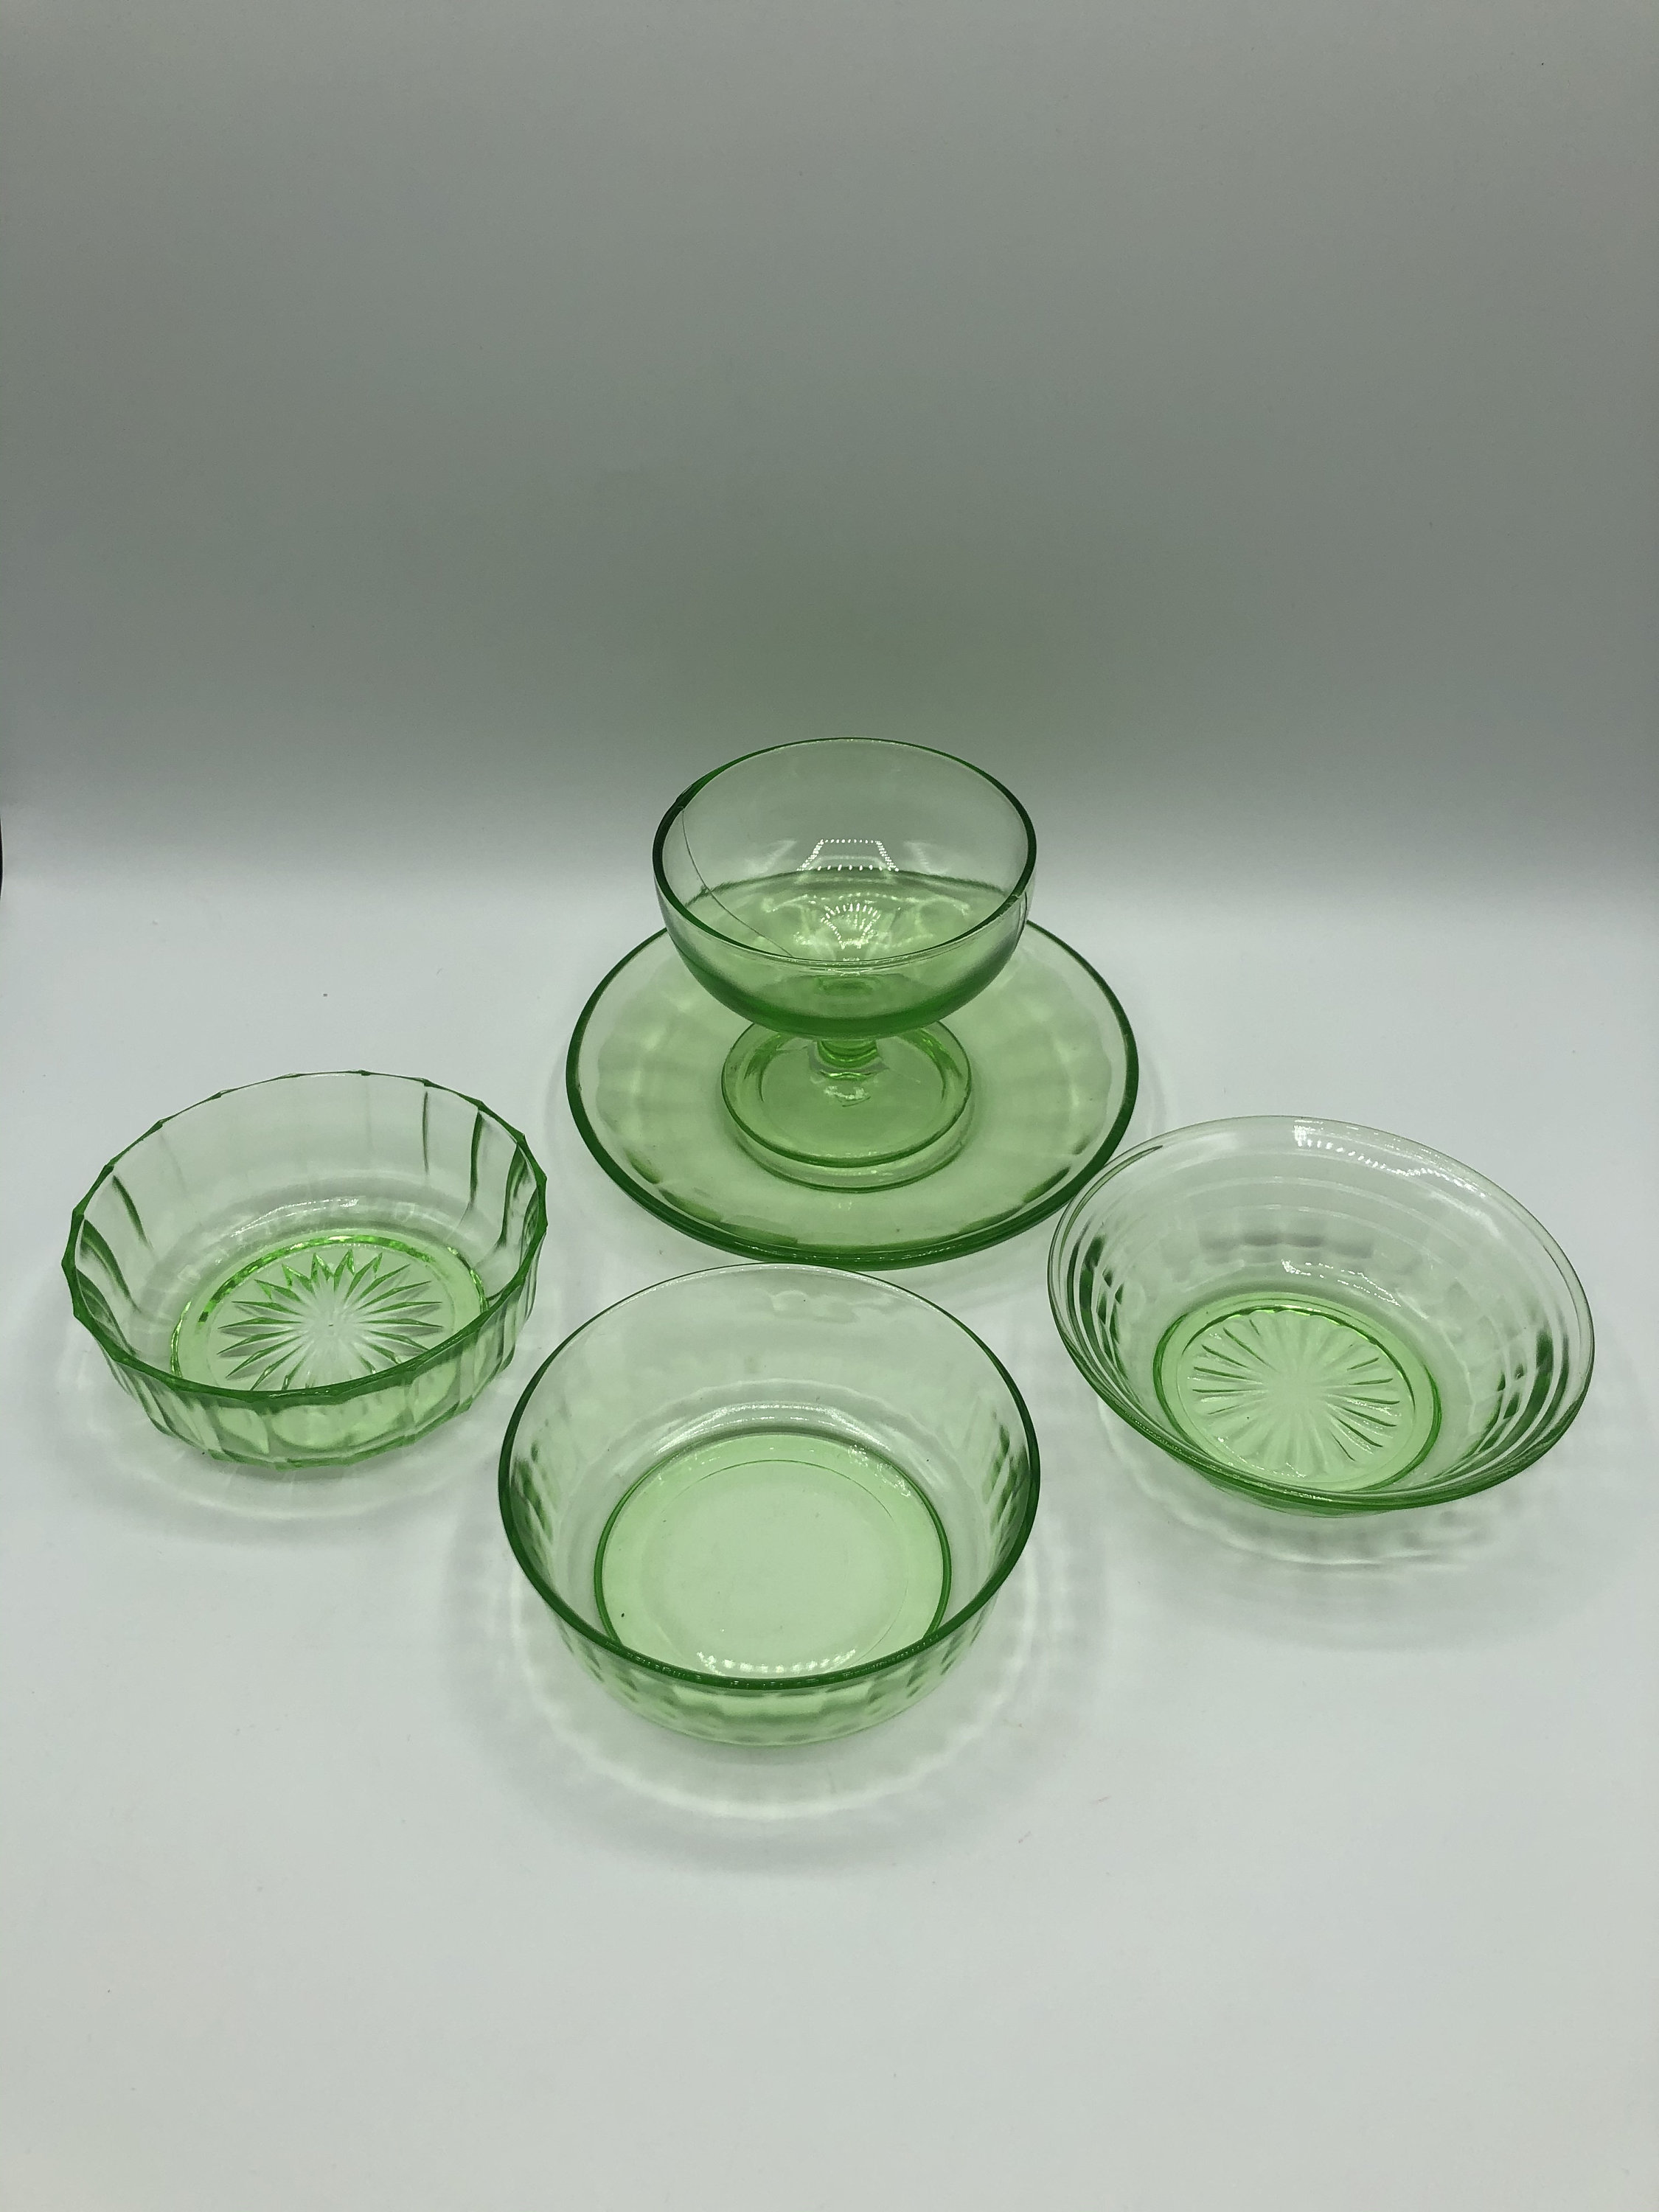 Green Vaseline Glass 5 Pieces Vintage Depression Federal Glass | Etsy